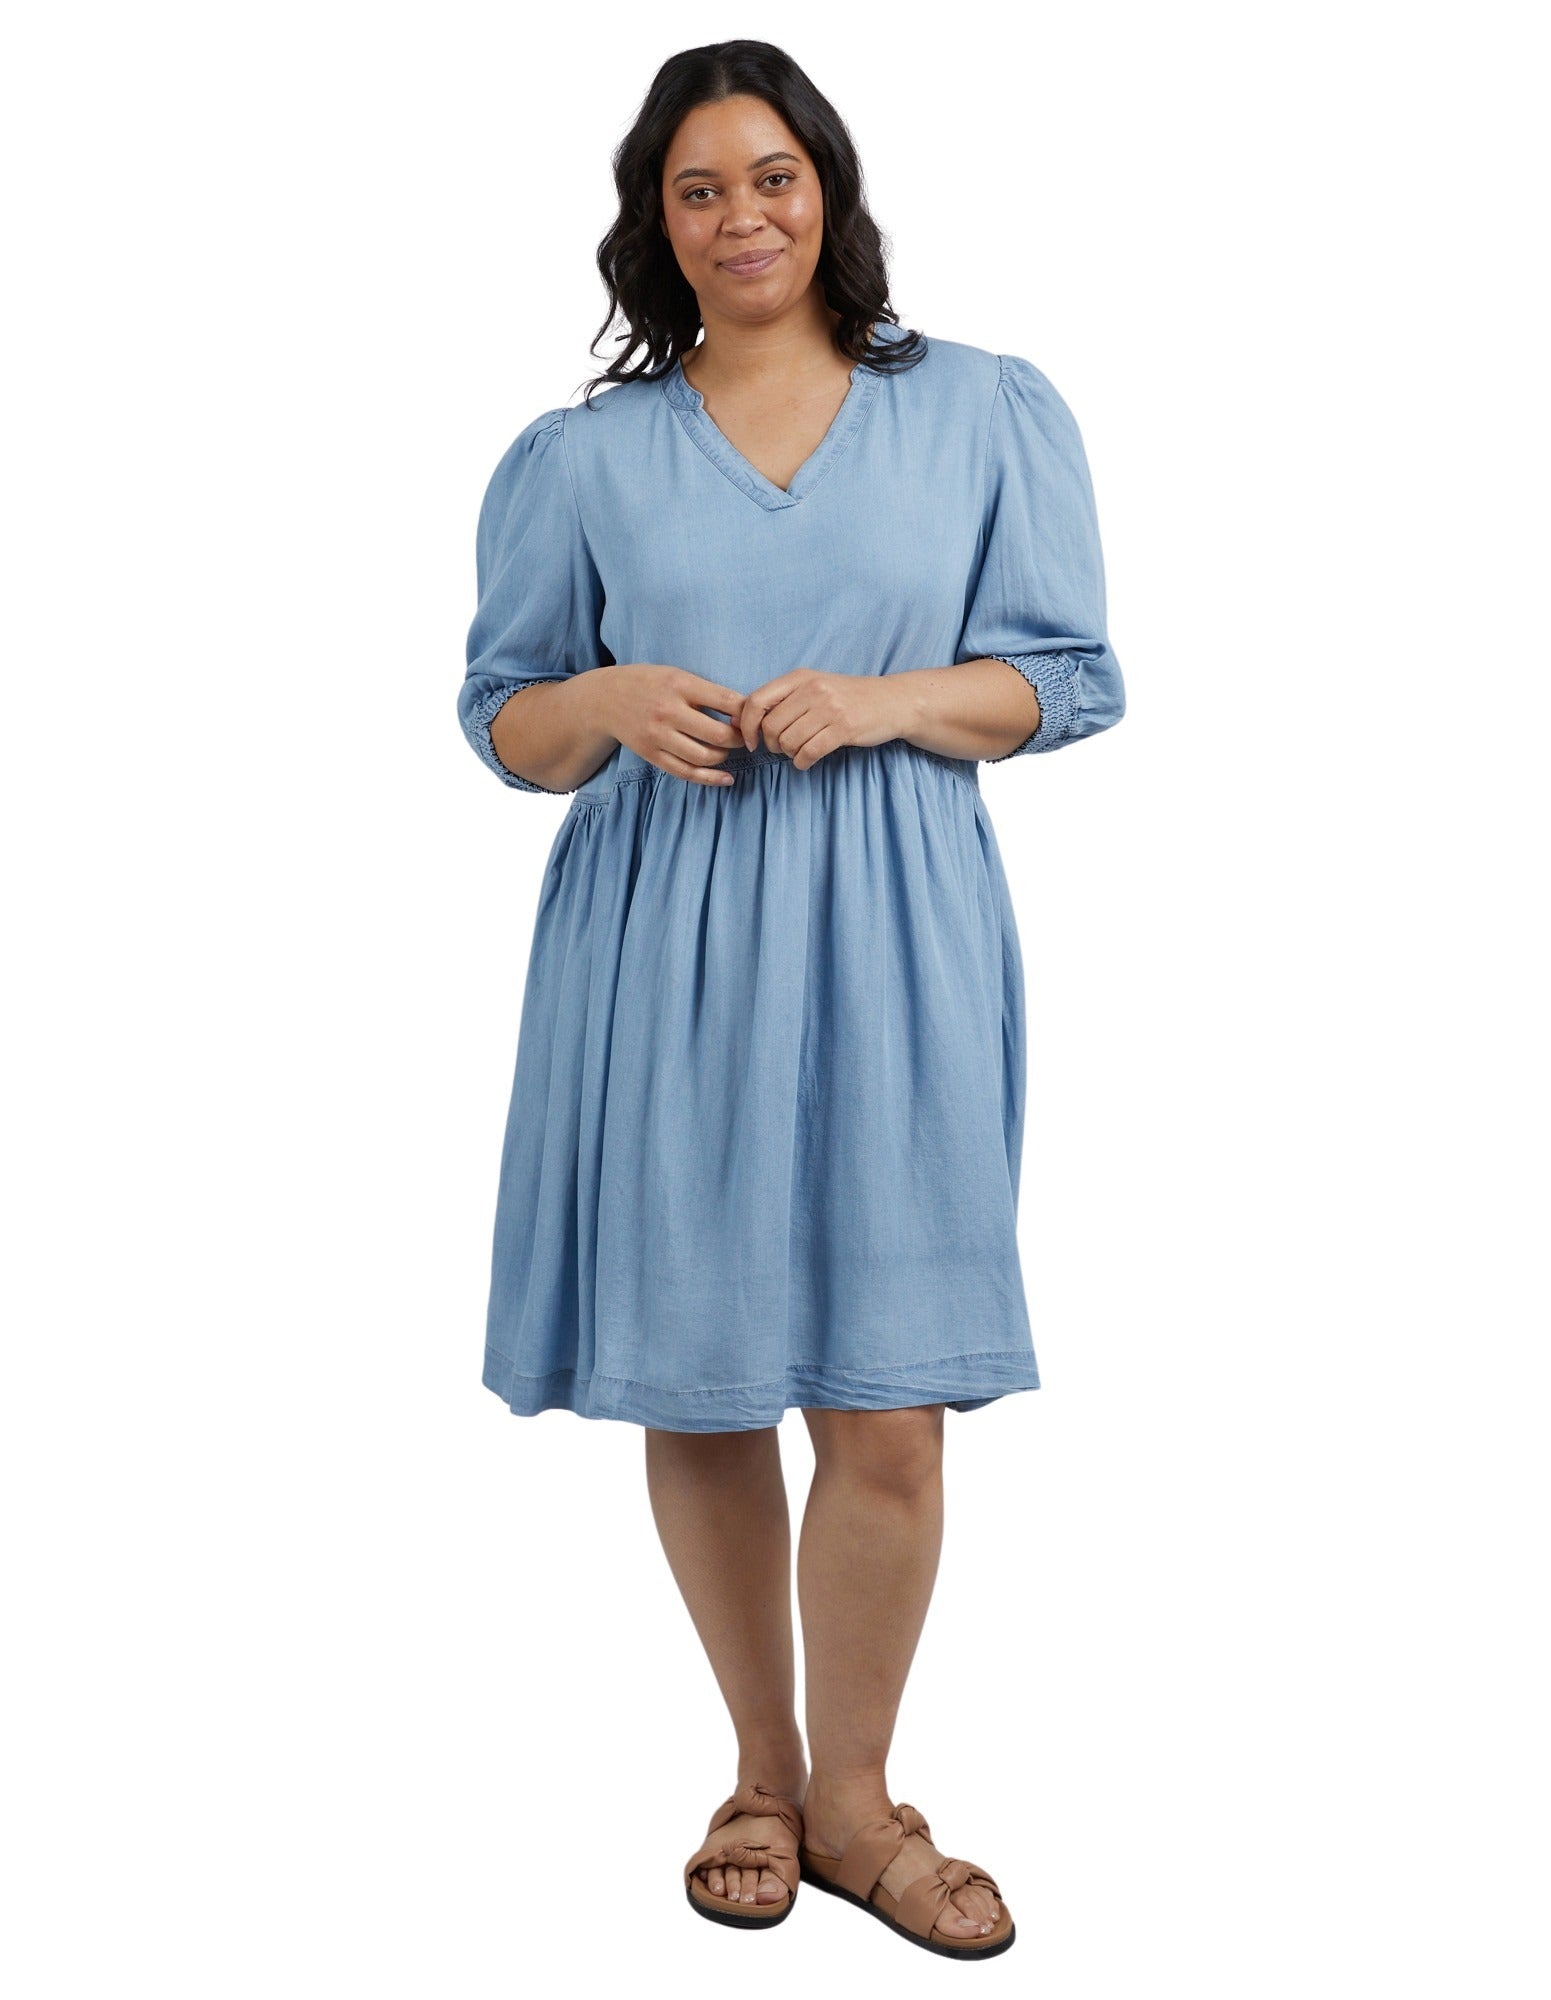 Elm - Shanee Chambray Dress - Blue Wash - Last One Size 12!